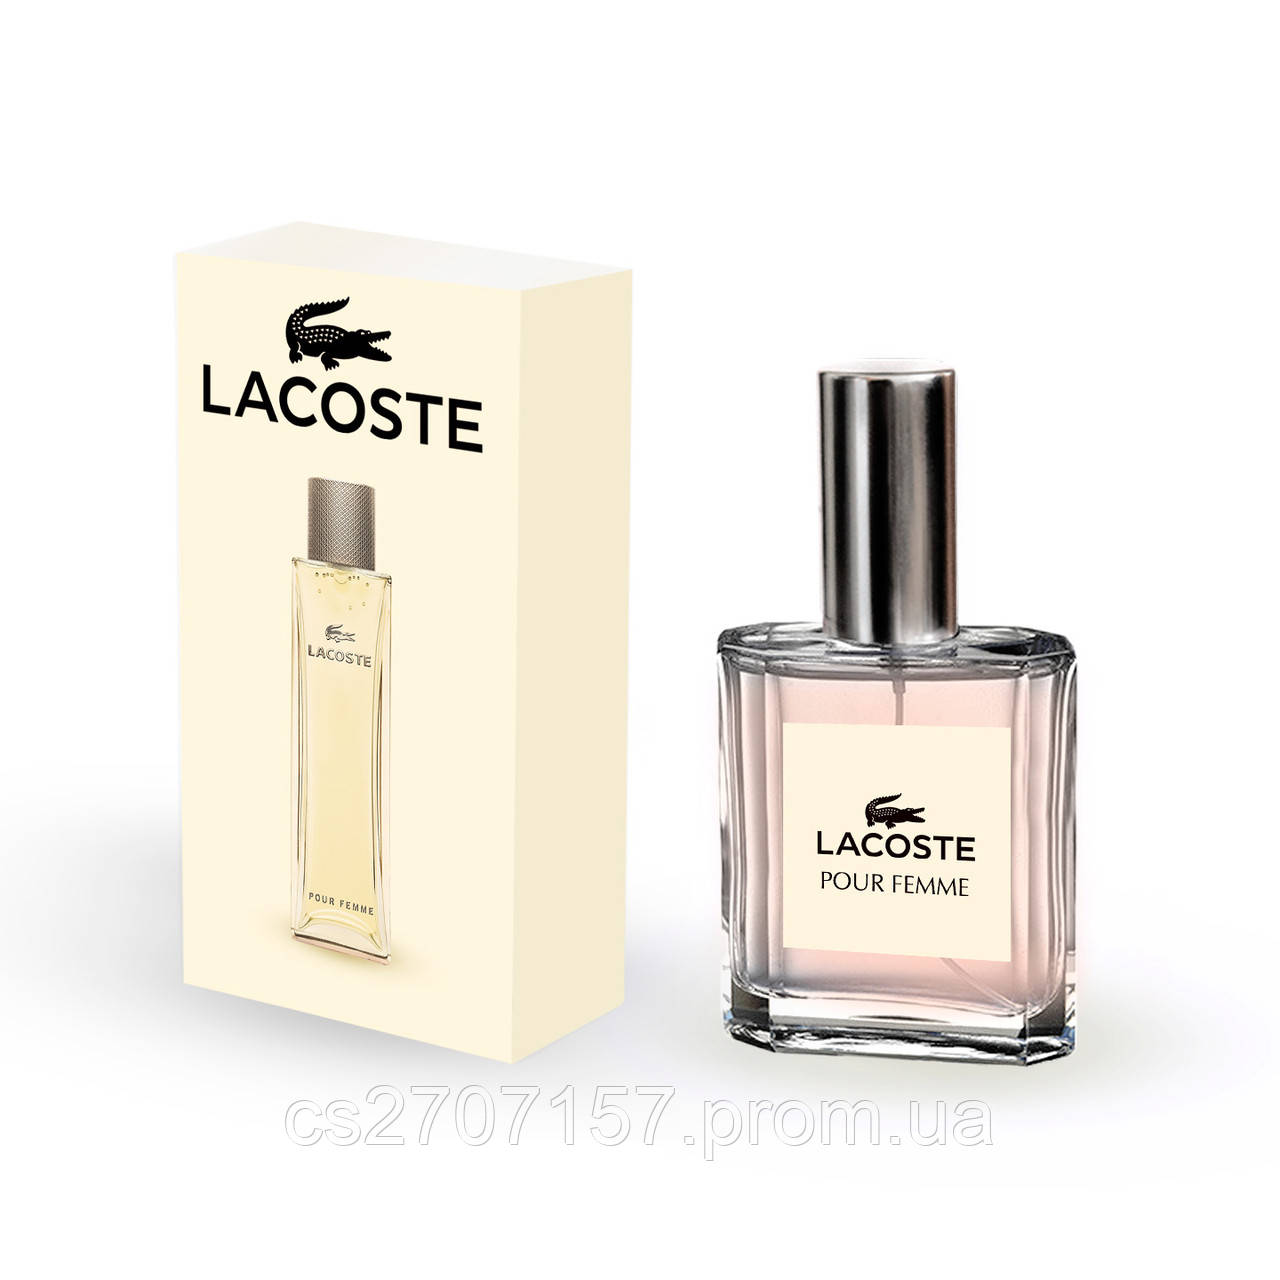 Жіночий міні парфуми Lacoste Pour Femme 35 мл